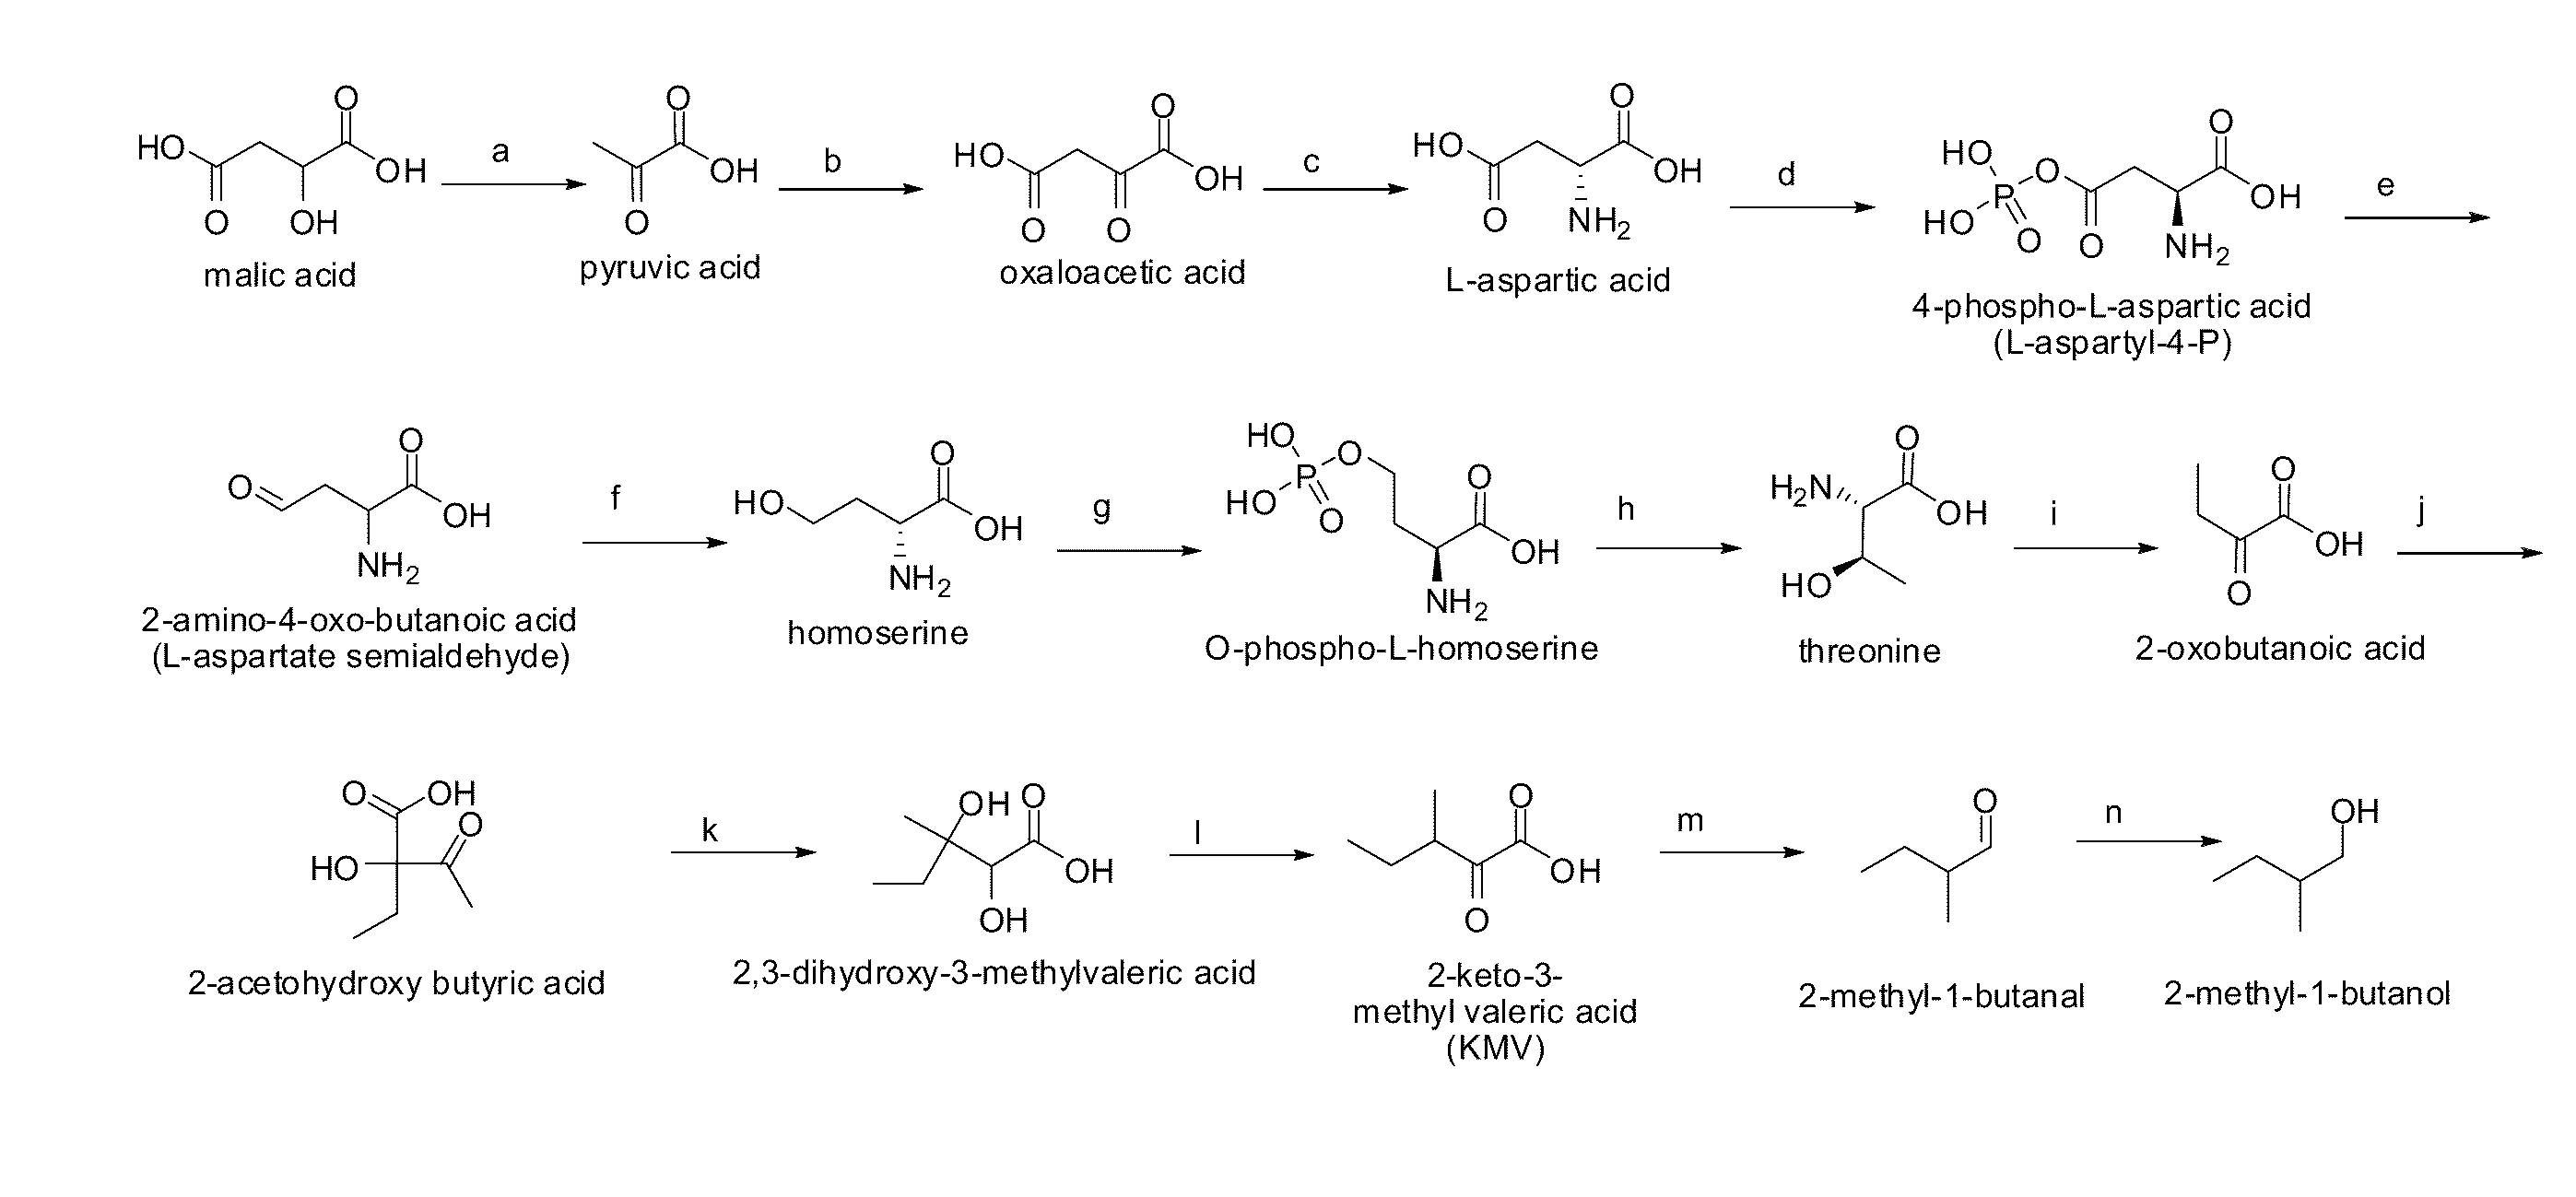 Methylbutanol as an advanced biofuel